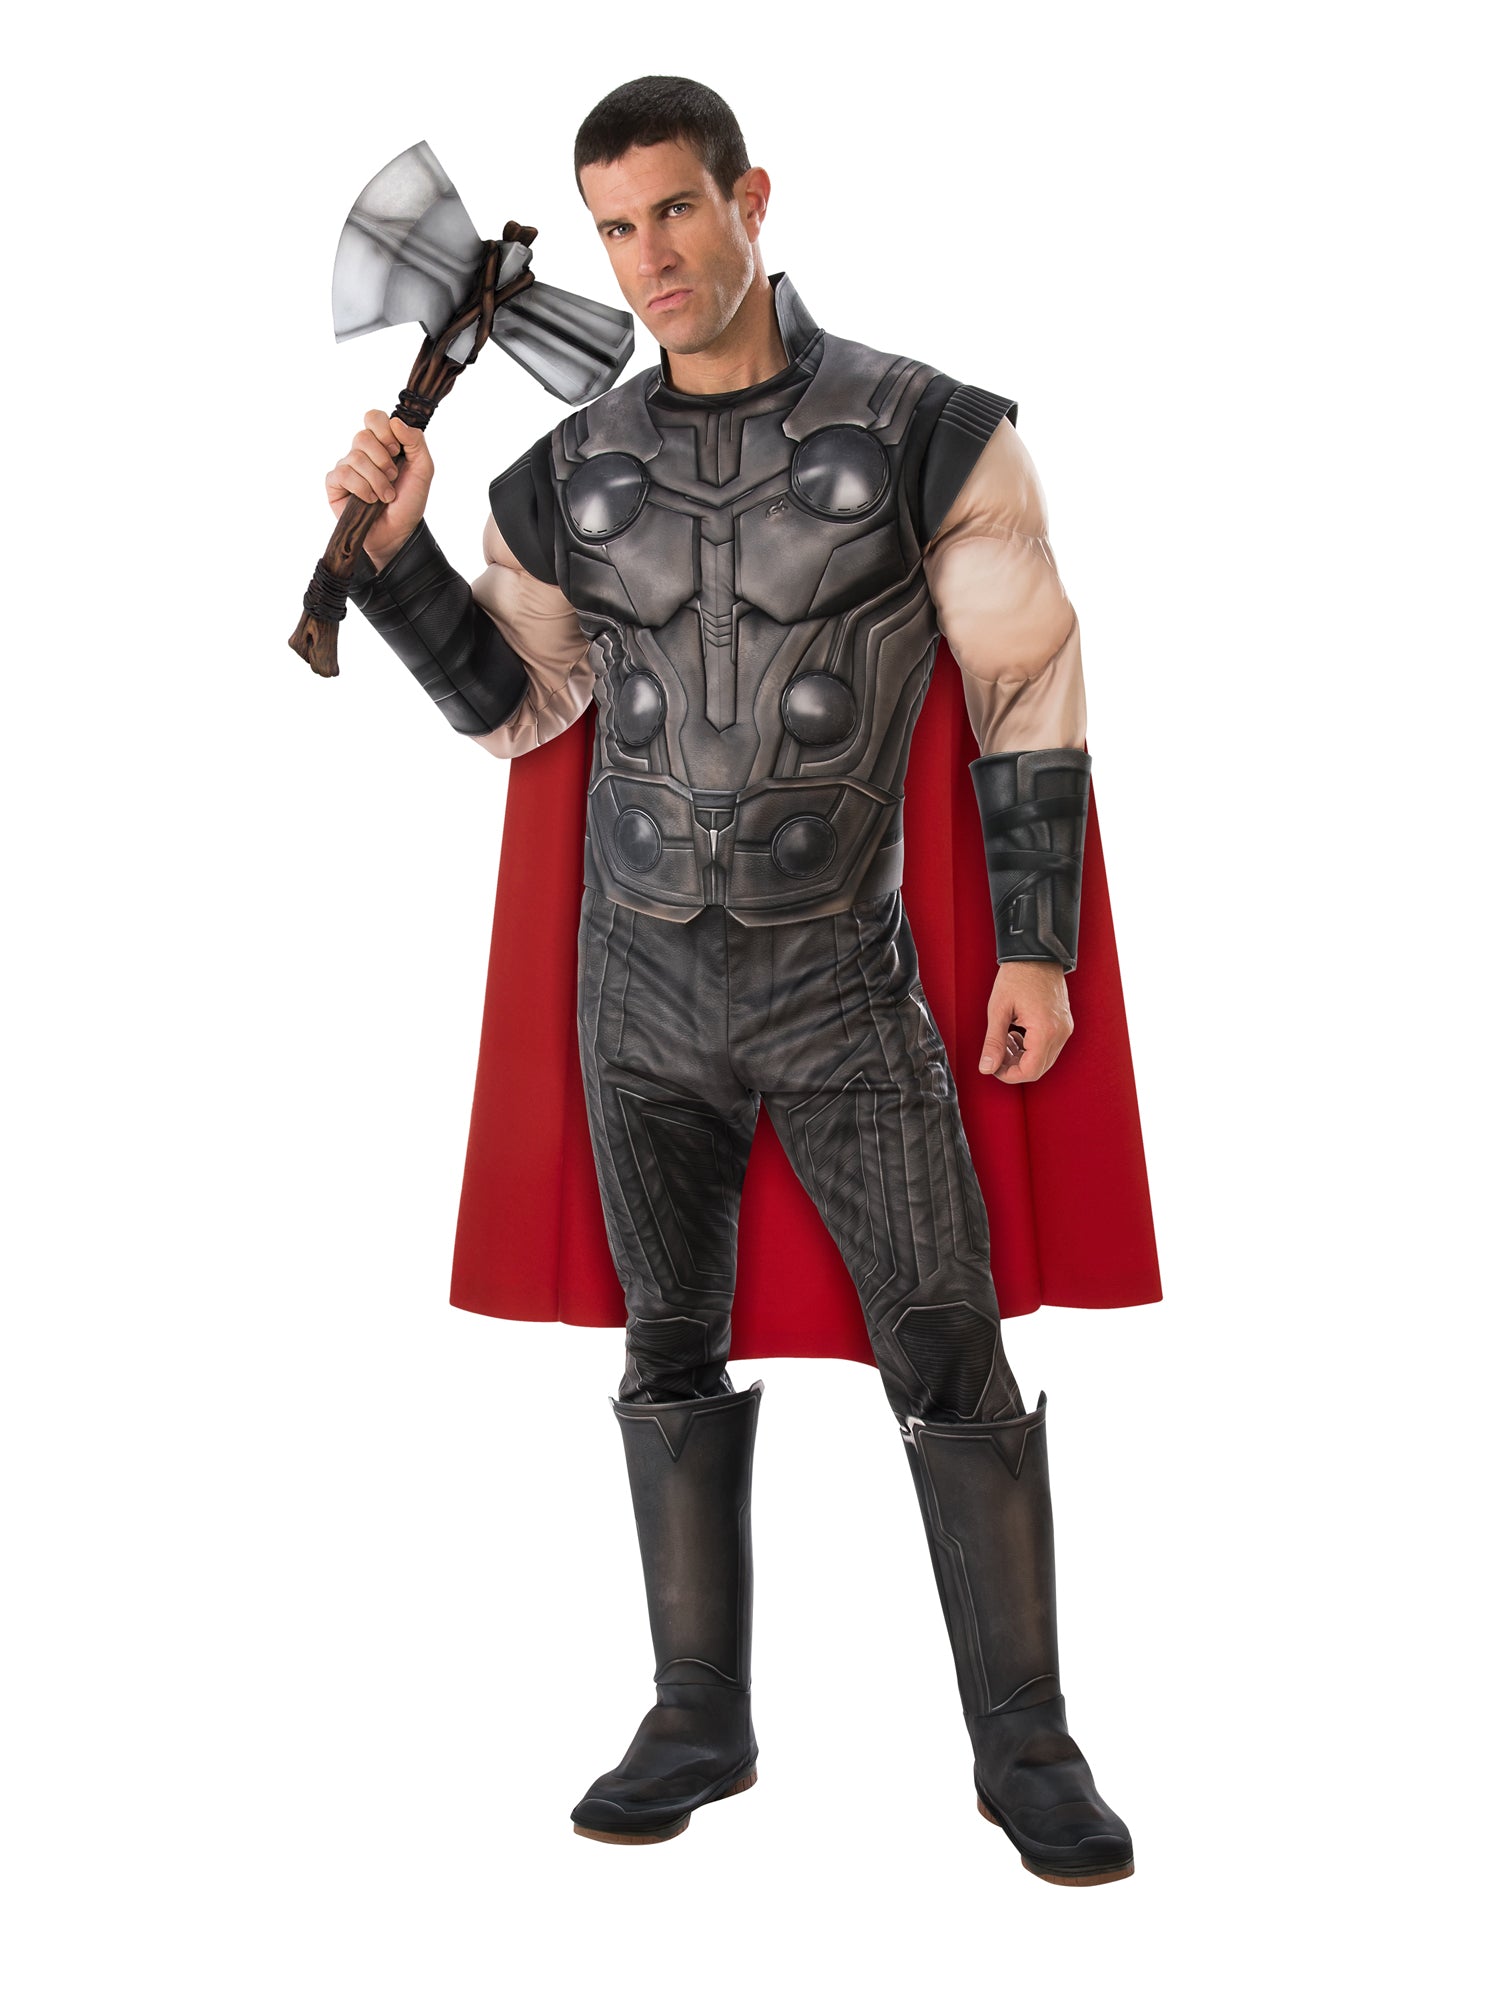 Thor, Endgame, Avengers, Endgame, Multi, Marvel, Adult Costume, Extra Large, Front